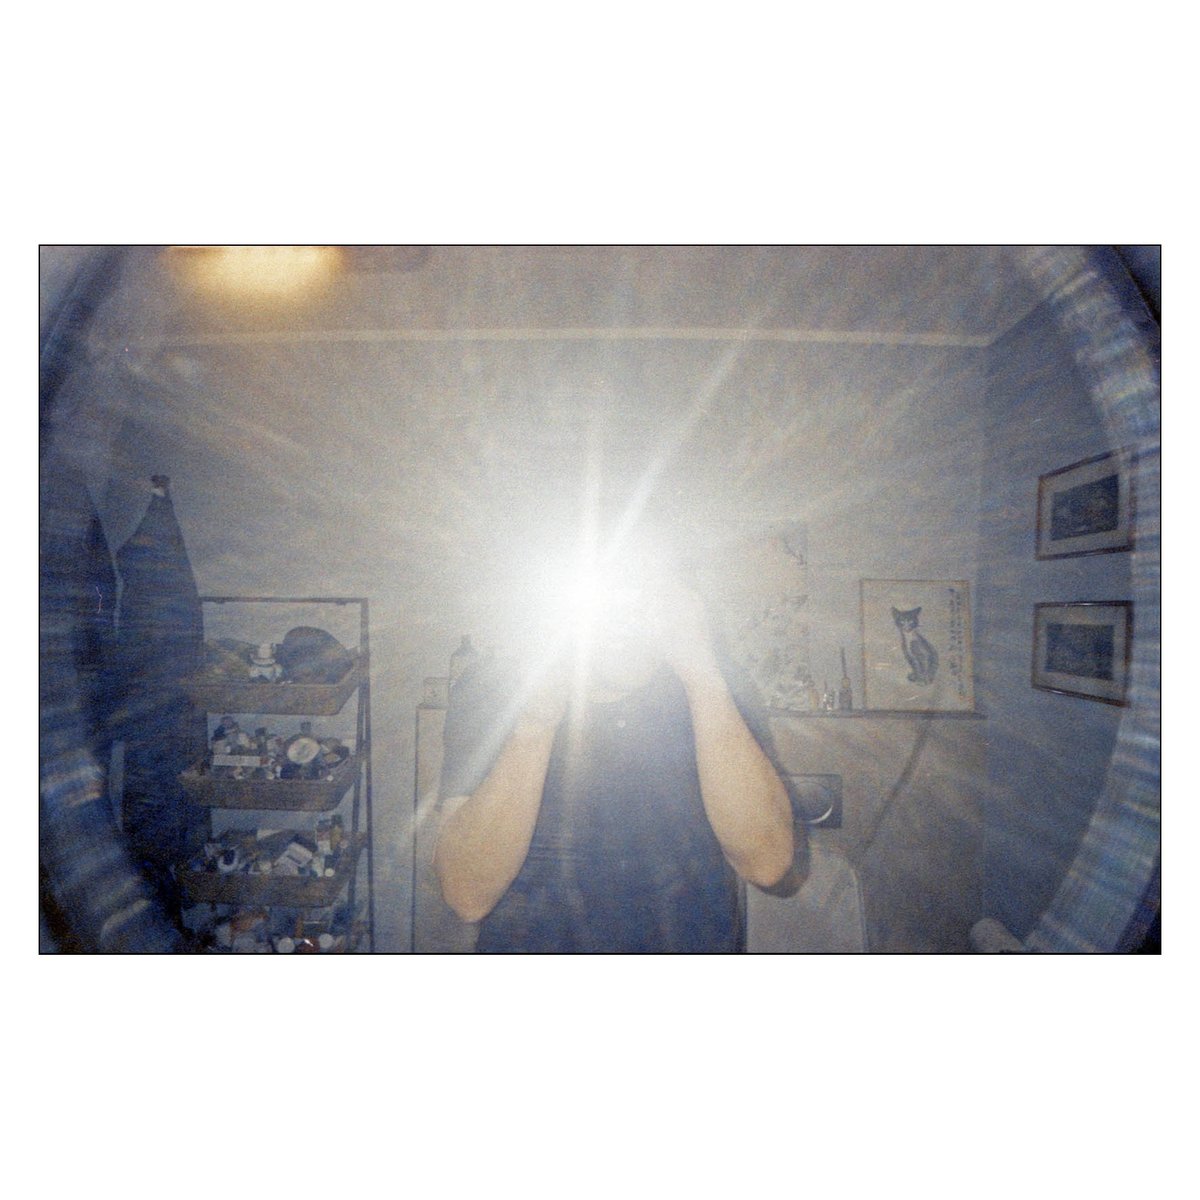 #selfportrait #c41 #developedathome #35mmfilm #plasticcamera #fotografiaanalogica #autoritratto #colorfilmphotography #filmphotography